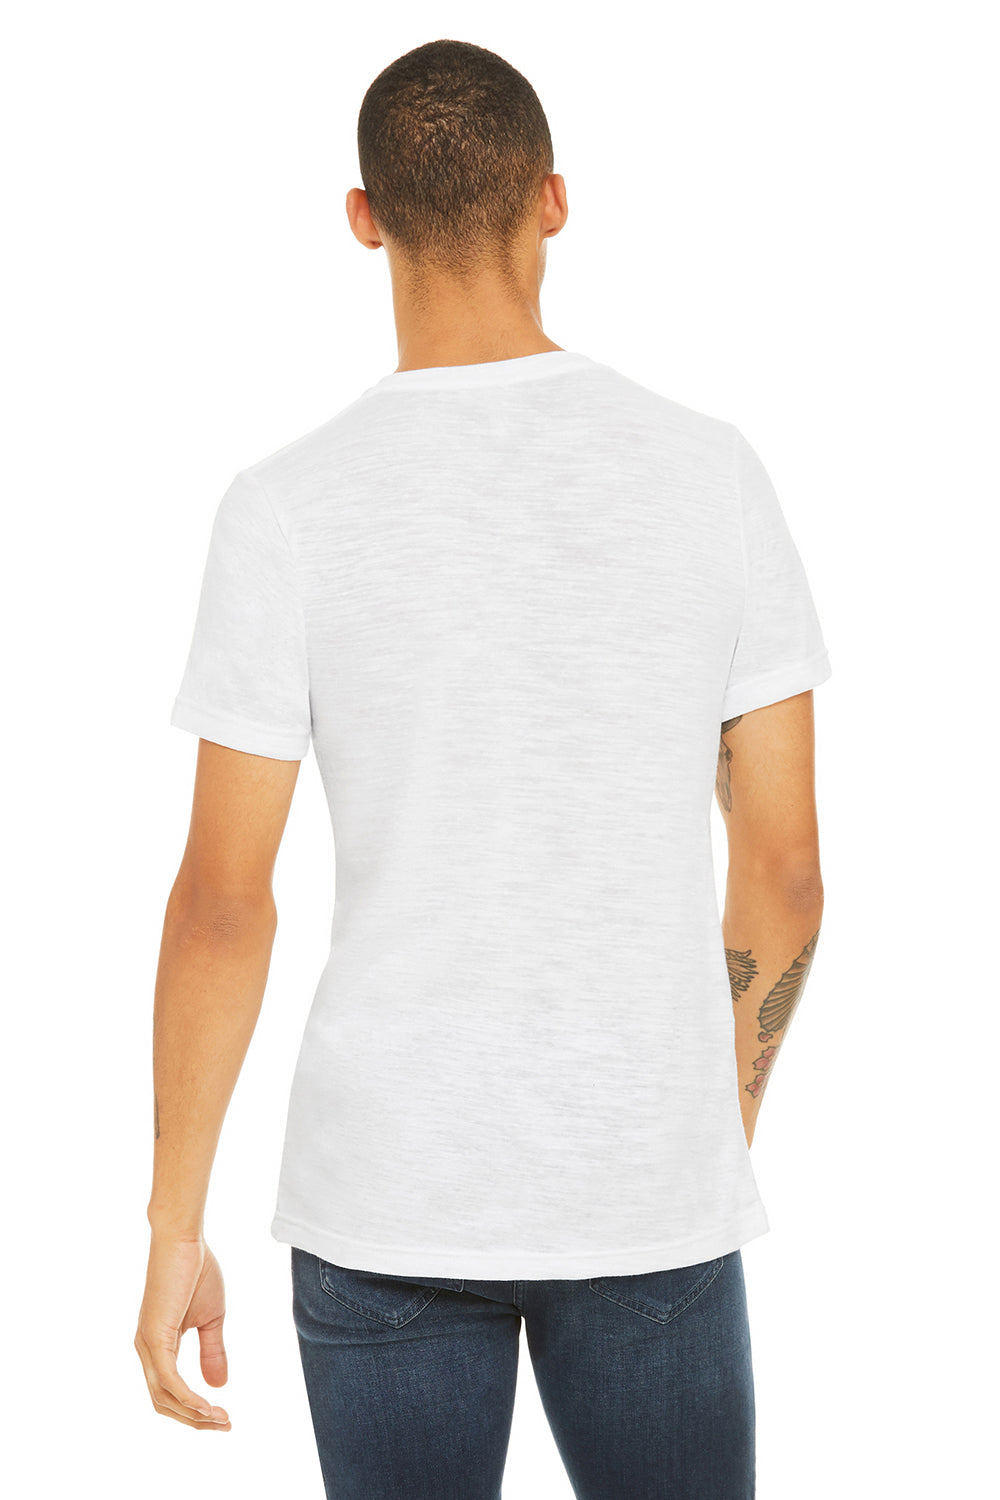 Bella + Canvas 3005 Mens Jersey Short Sleeve V-Neck T-Shirt White Slub Back